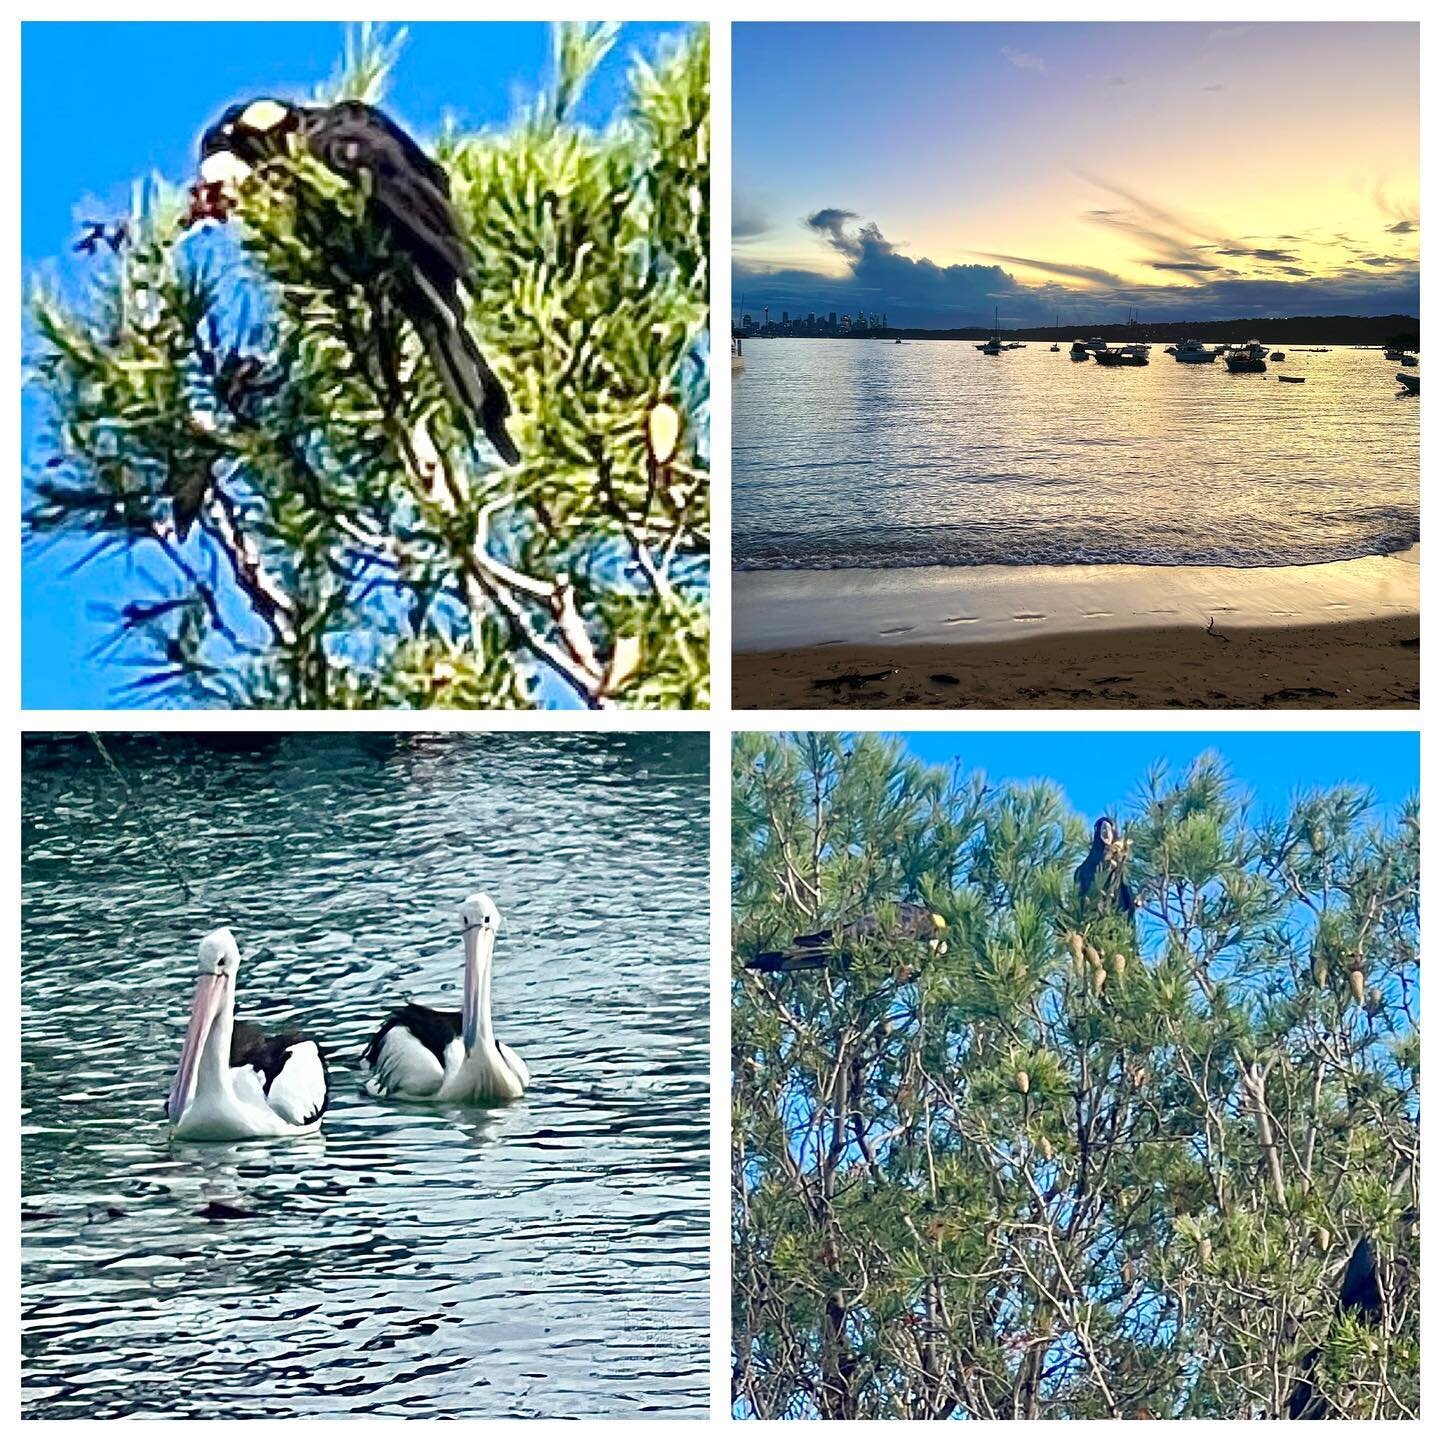 Beautiful Sydney surprises on this weekends walks! #beautiful #sydney #wildlife #landscape #sunsets #blackcockatoo #pelican #dogwalks